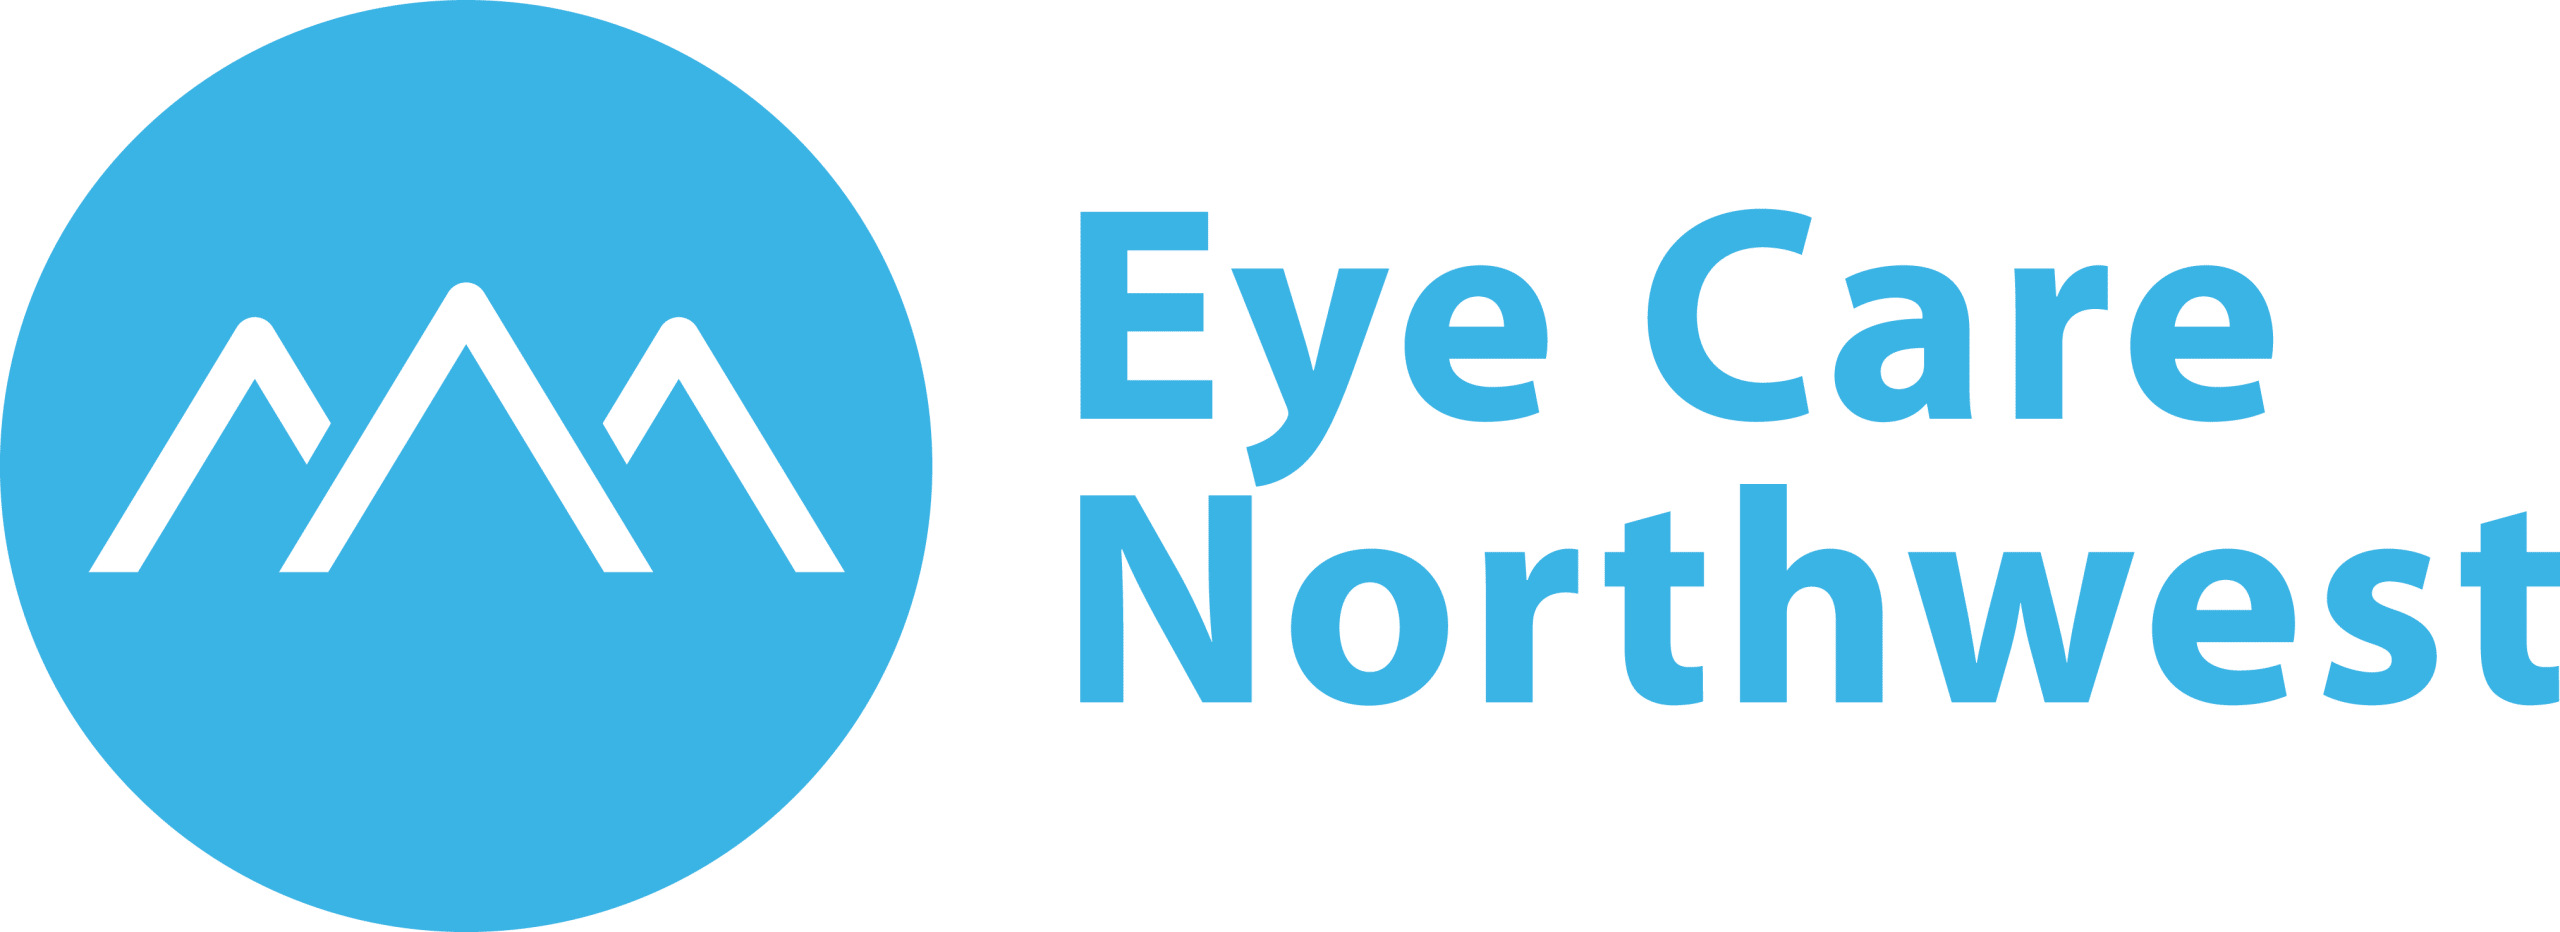 Eye Care Northwest Logo in Blue